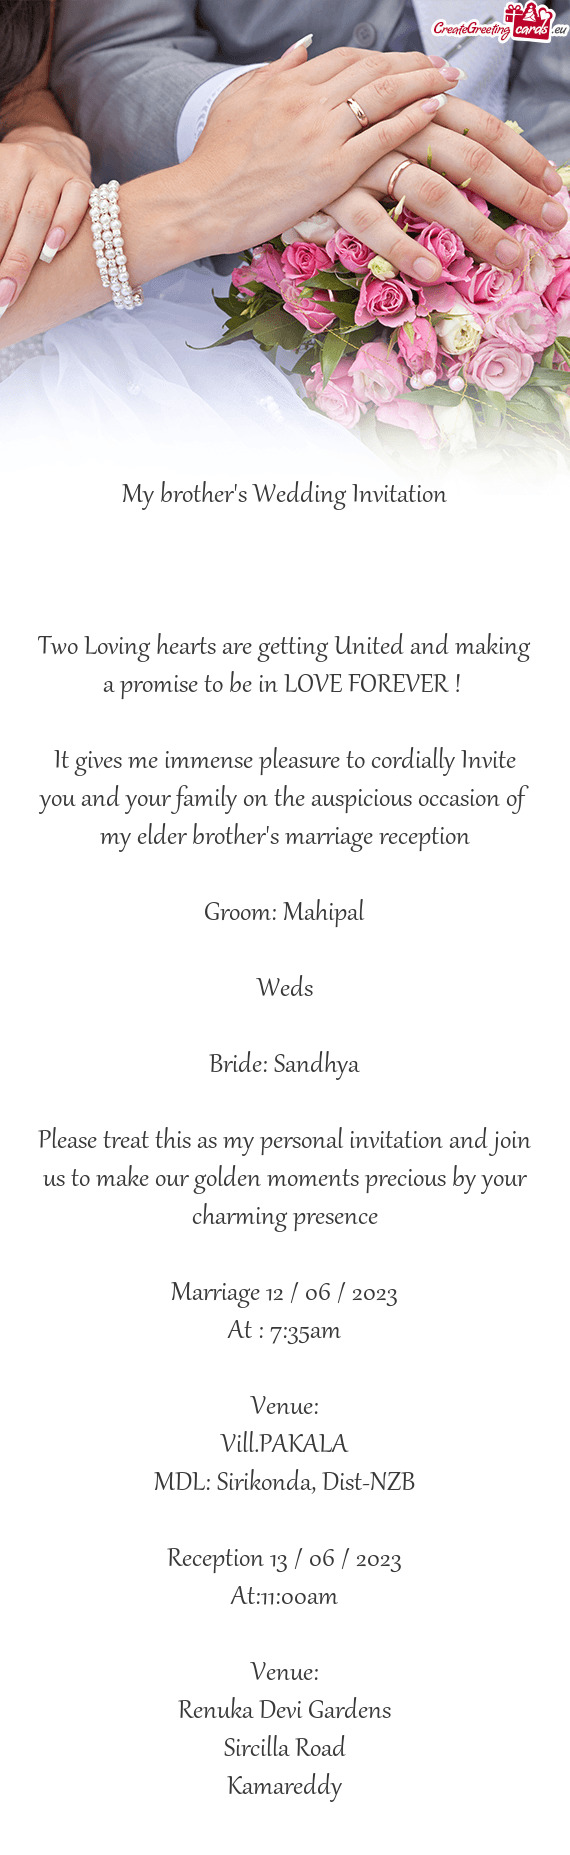 Bride: Sandhya